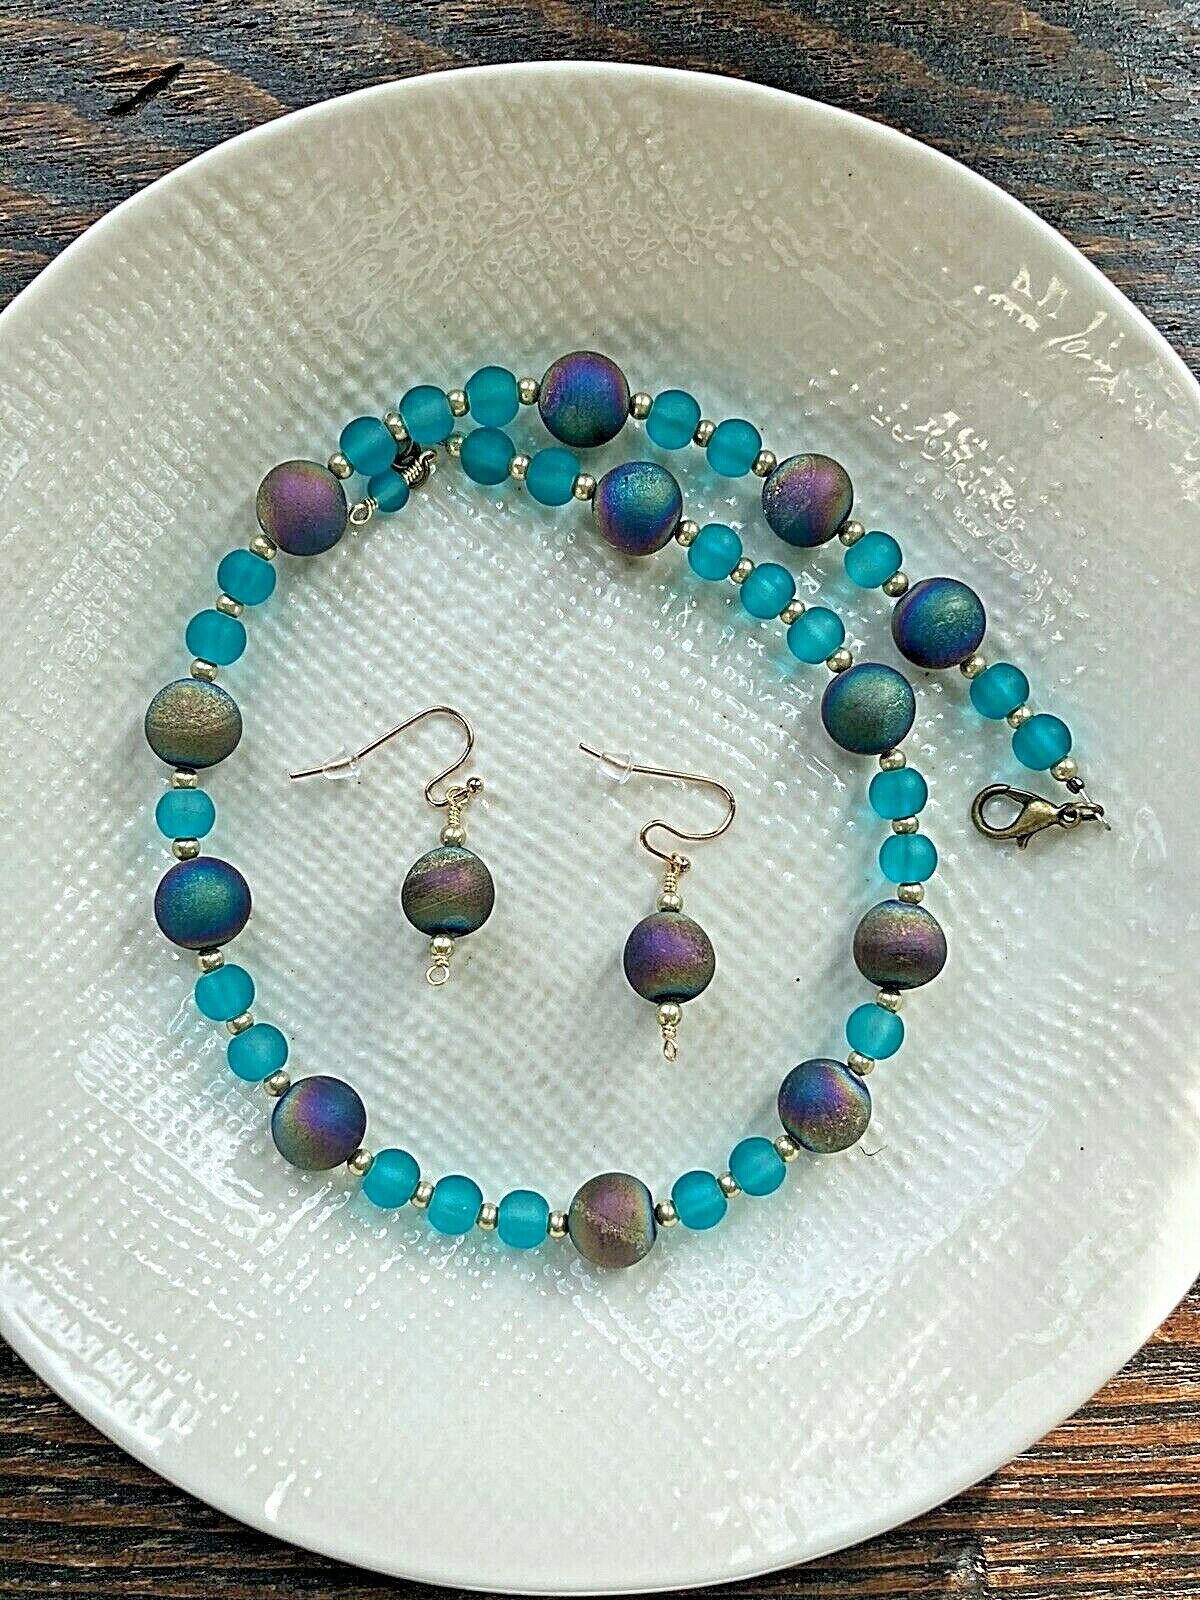 Druzy Quartz Stone And Matte Glass Necklace Earring Set, Blue Handmade In Usa